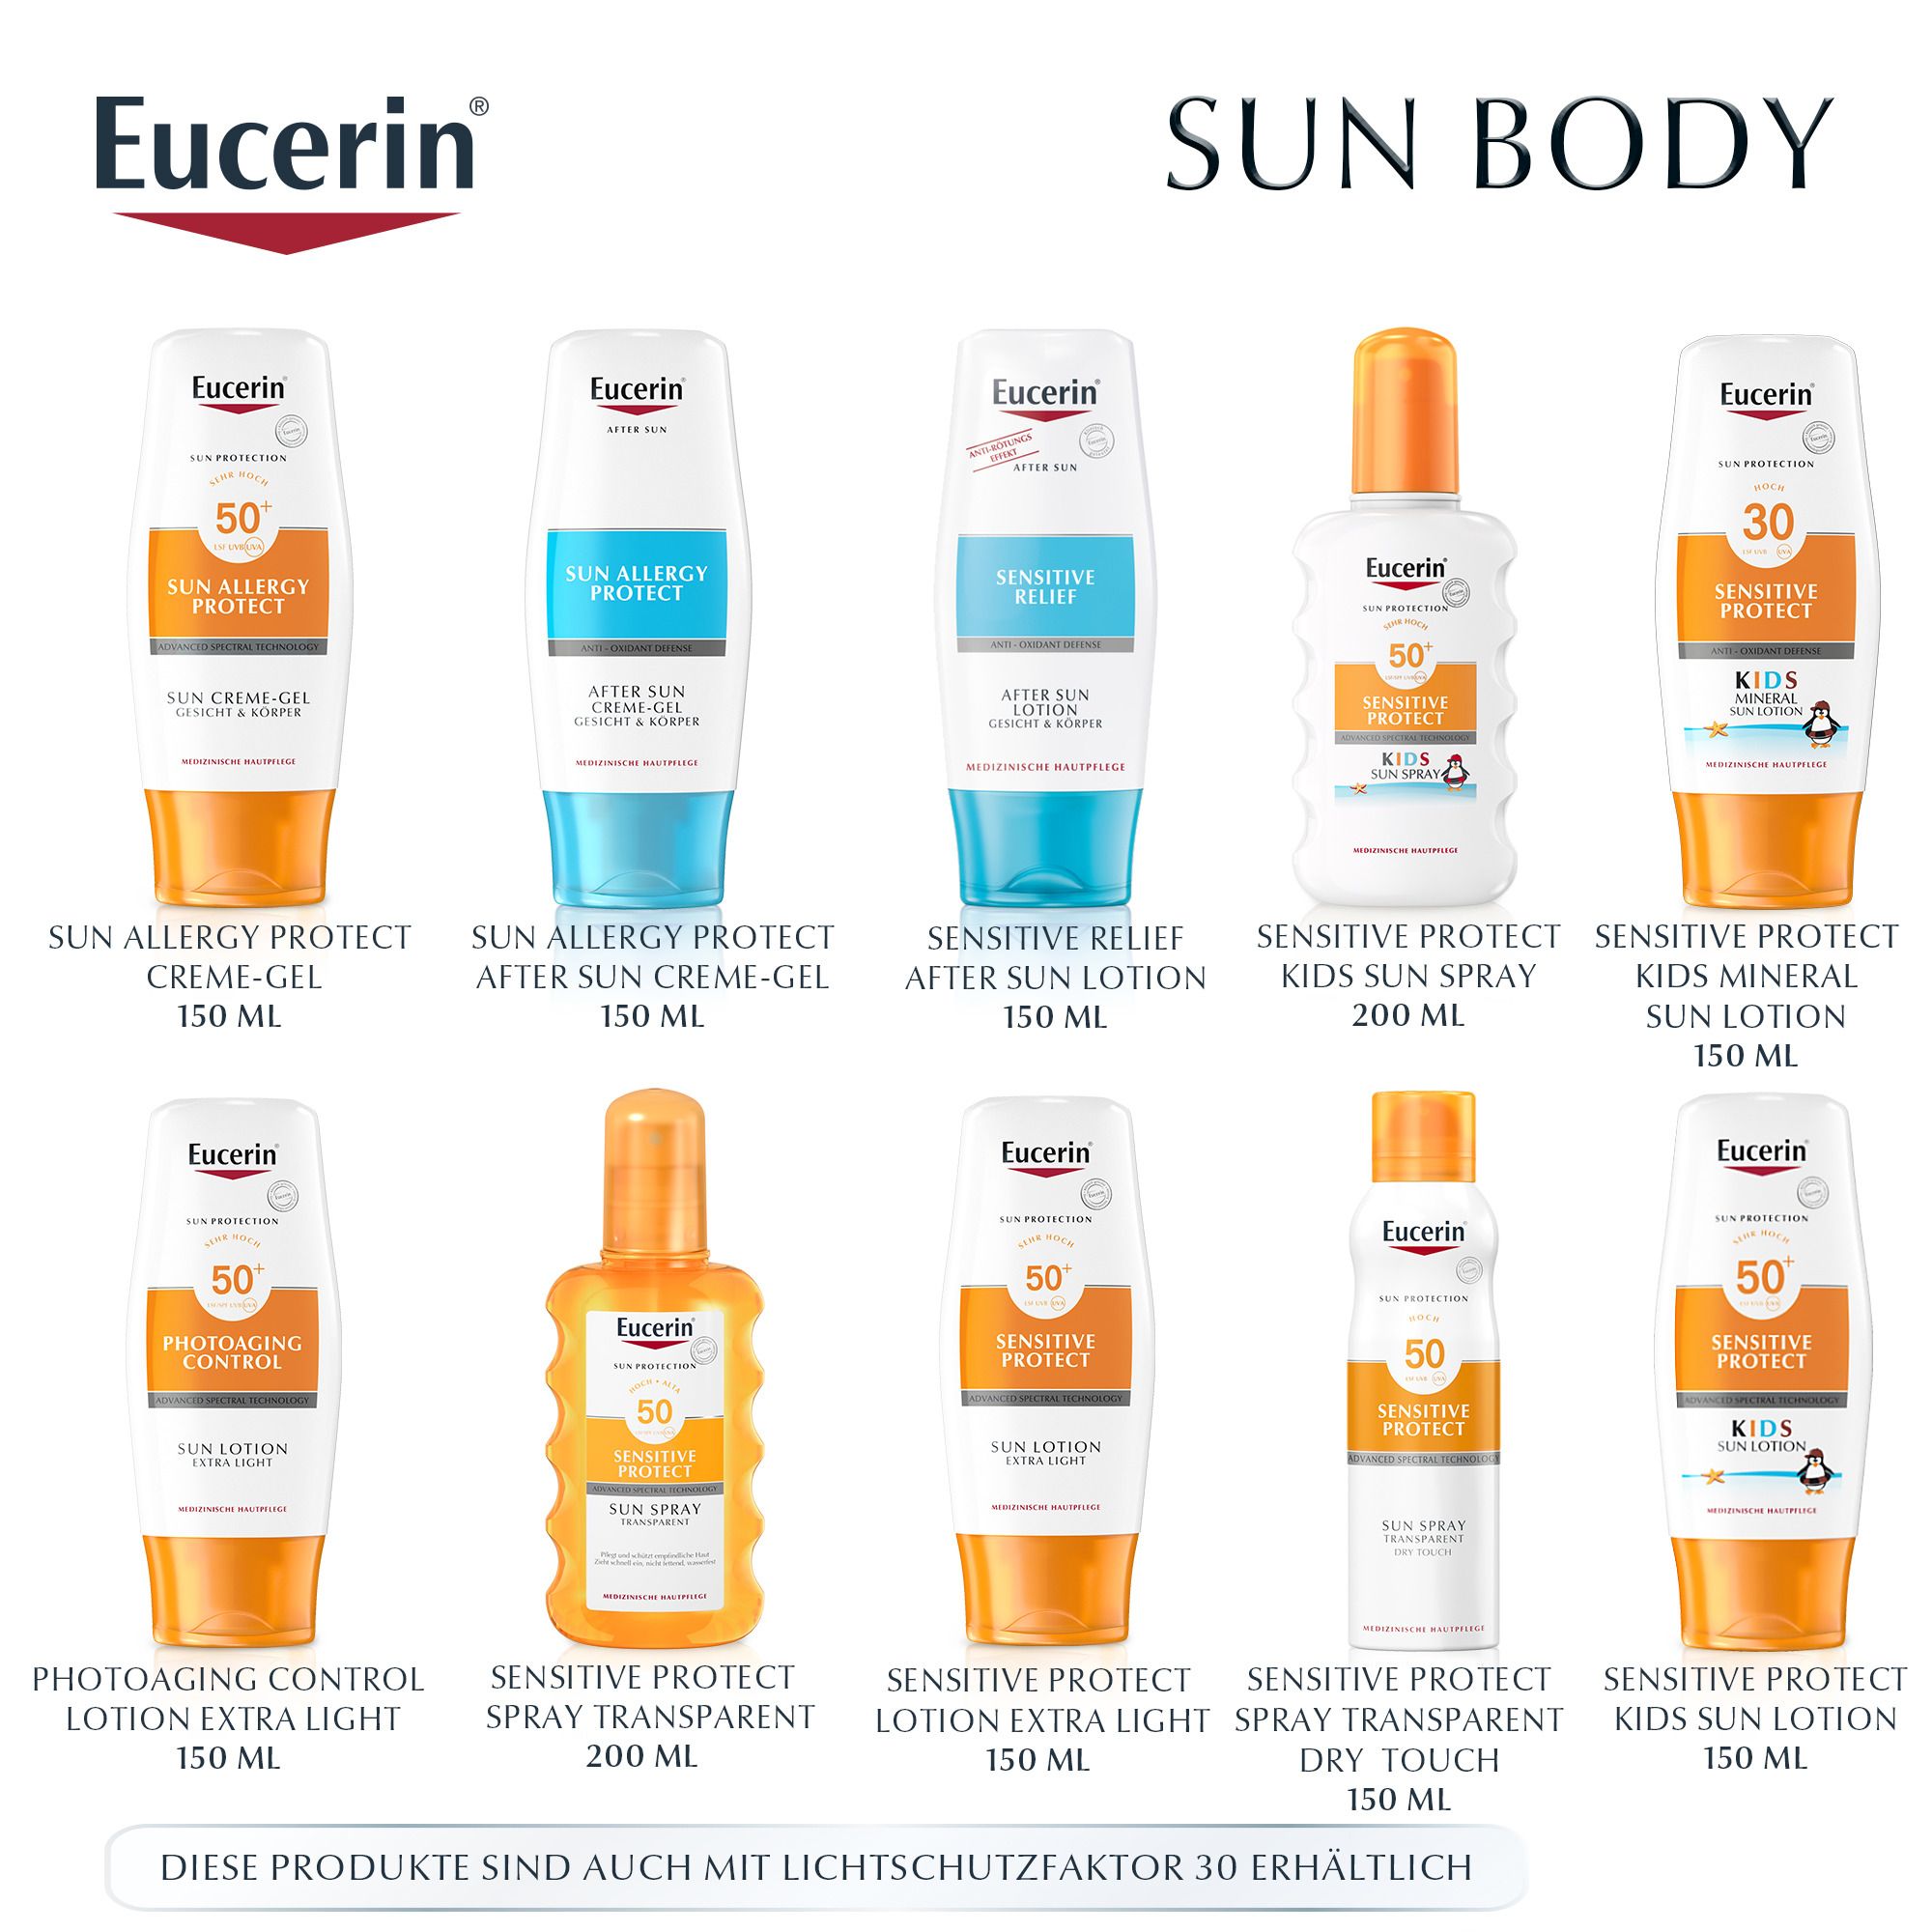 Eucerin® Sun Photoaging Control Lotion Extra Light LSF 30 – Sonnenschutz hilft bei Photoaging und reduziert Falten